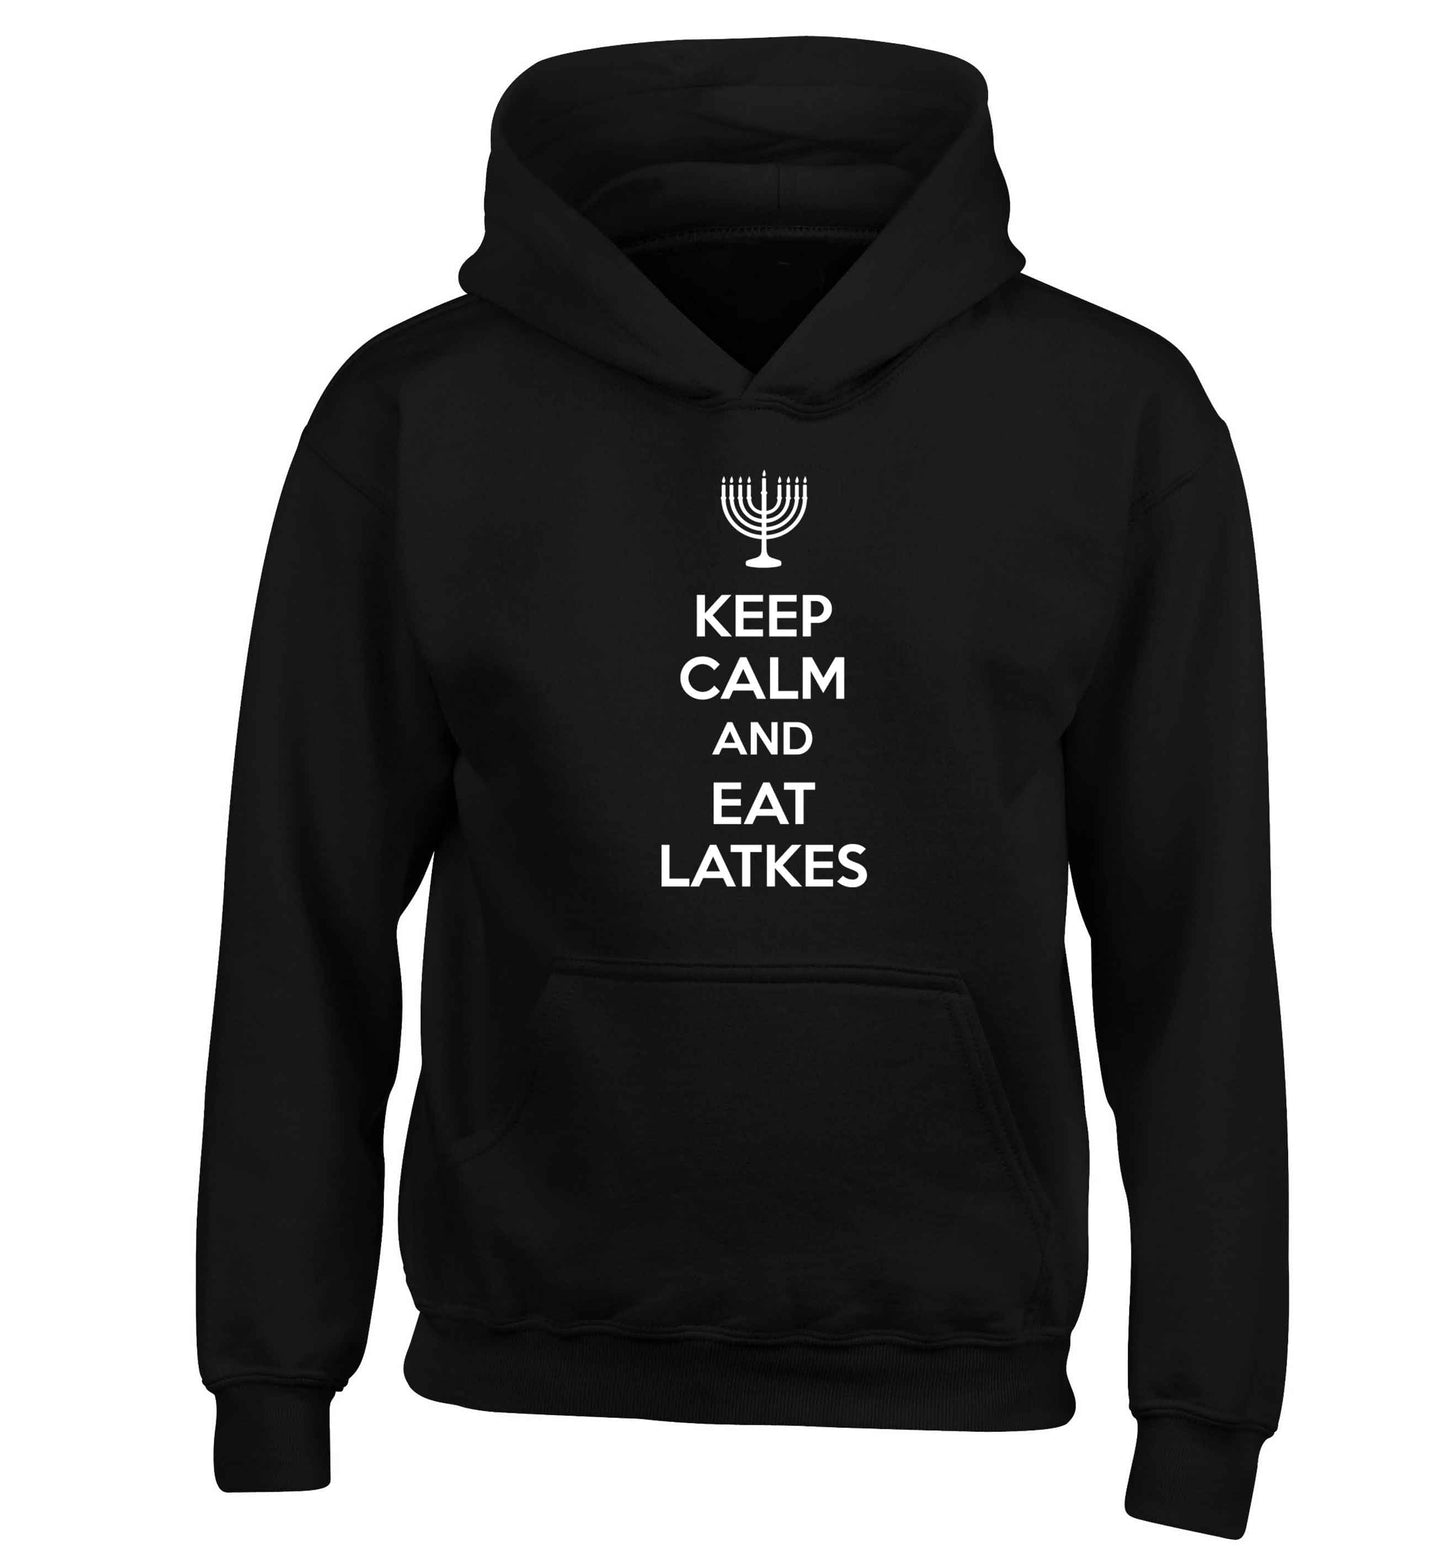 Keep calm and eat latkes children's black hoodie 12-13 Years